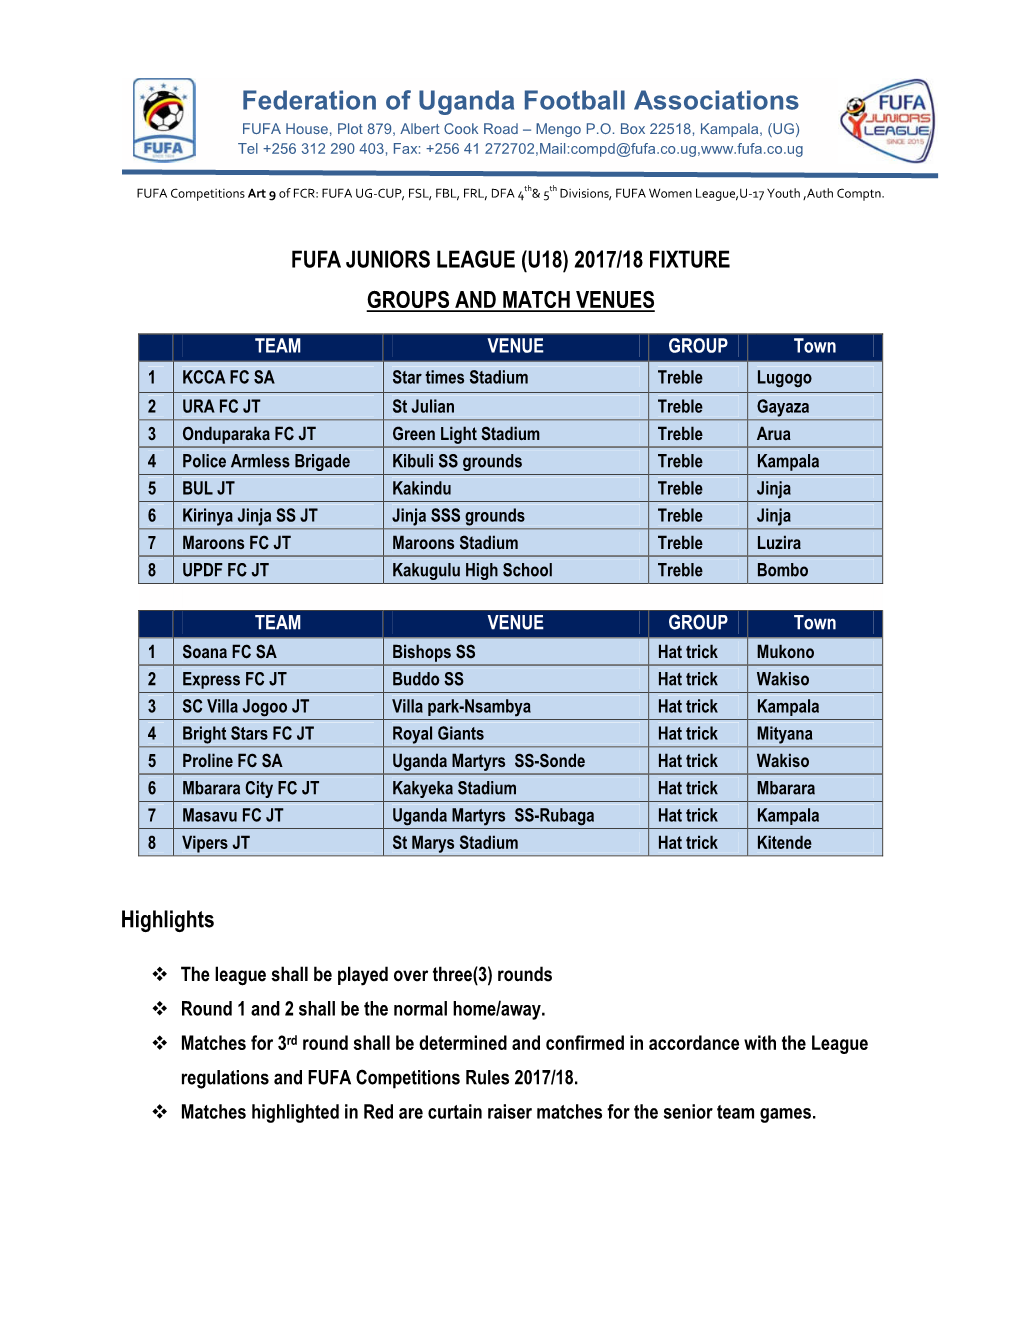 Fufa Juniors League (U18) 2017/18 Fixture Groups and Match Venues